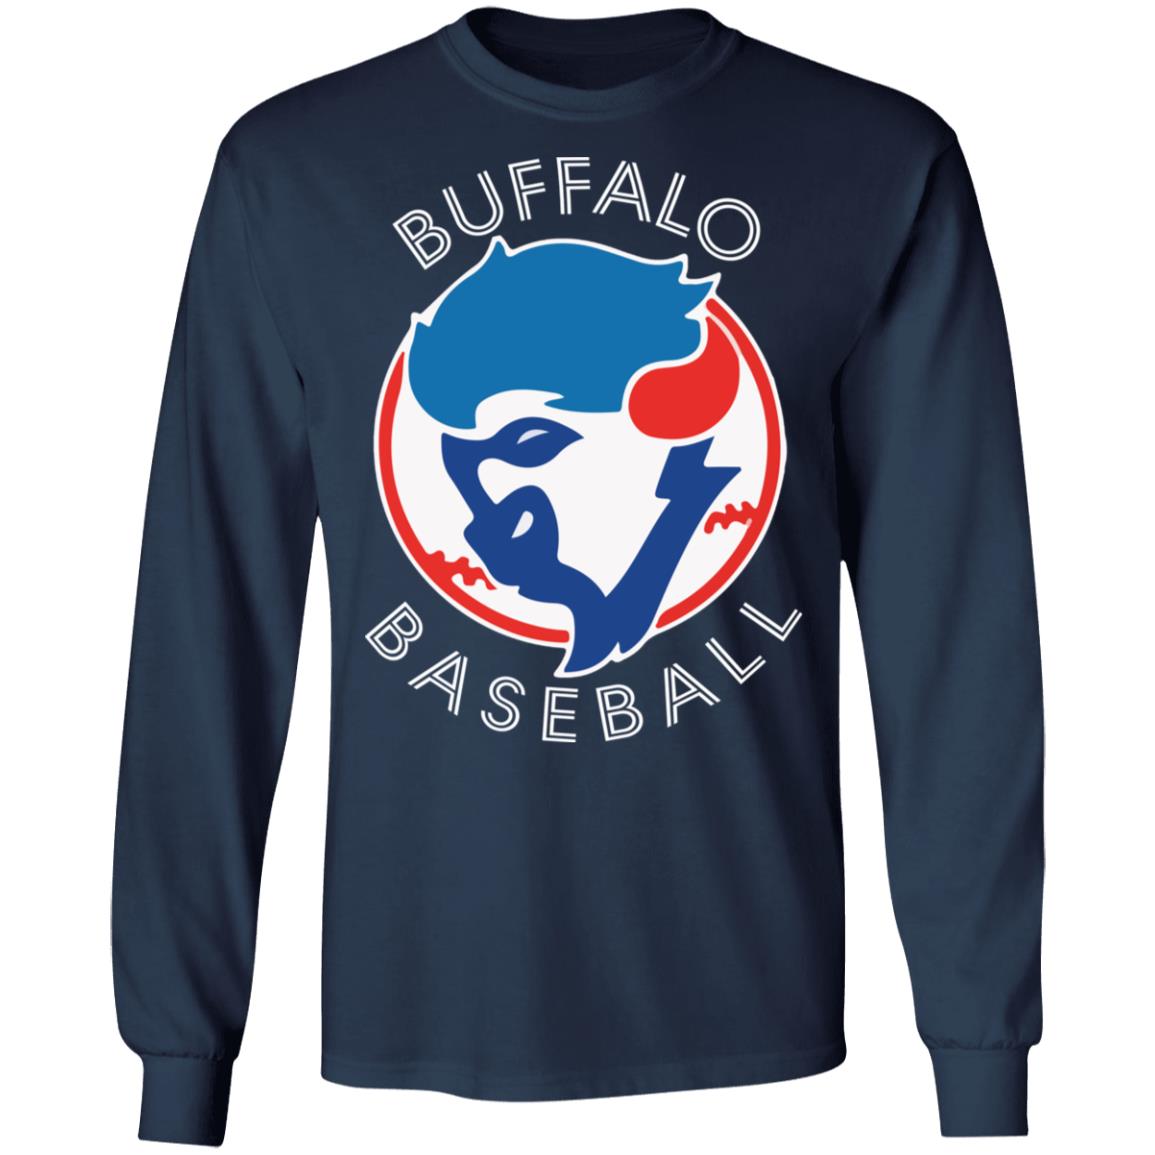 Buffalo blue jays shirt - Rockatee